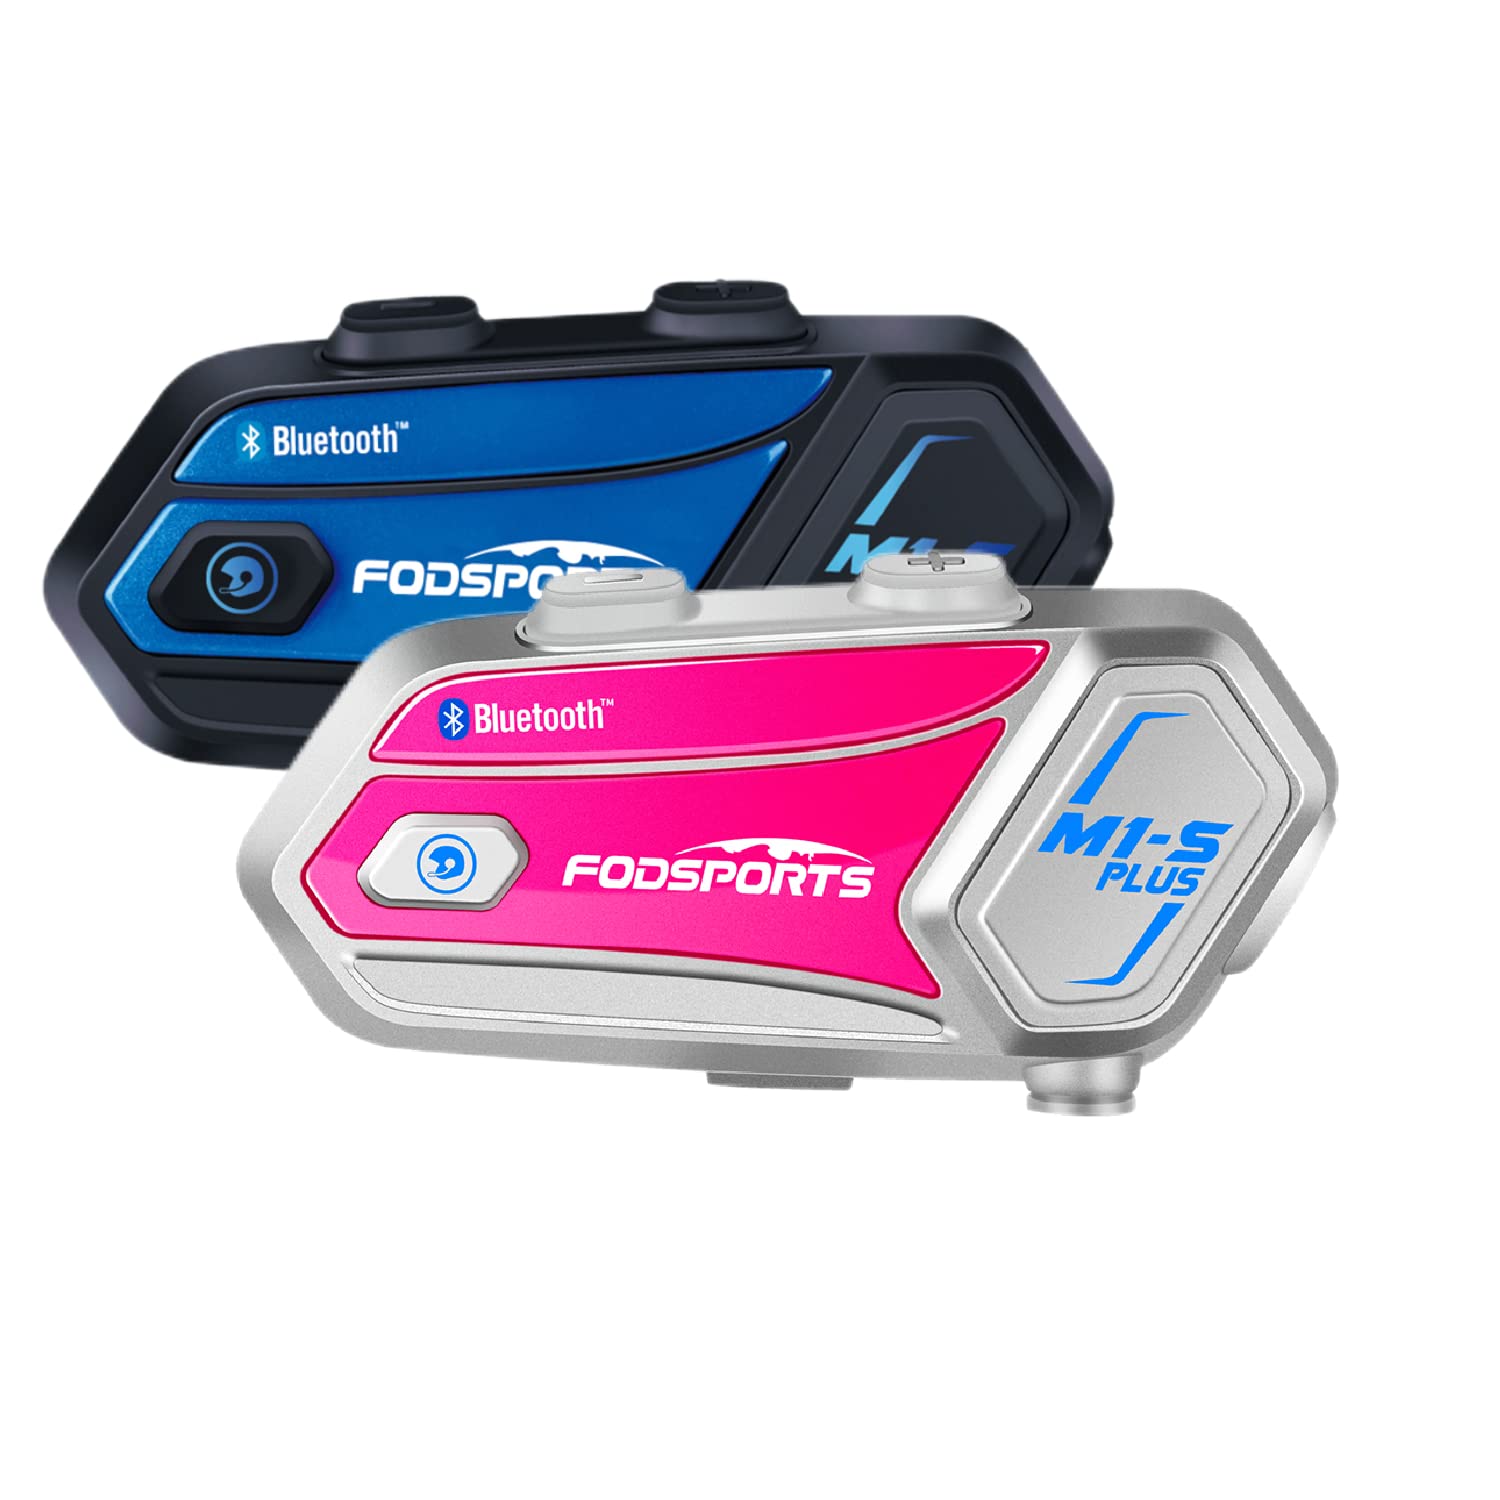 Fodsports M1-S Plus Motorrad Headset Bluetooth,Intercom Motorrad für 8 Motorräder Helm,Motorrad Kommunikationssystem mit 900mAH Batterie GPS MP3 FM Radio Musik teilen Mikrofon stumm